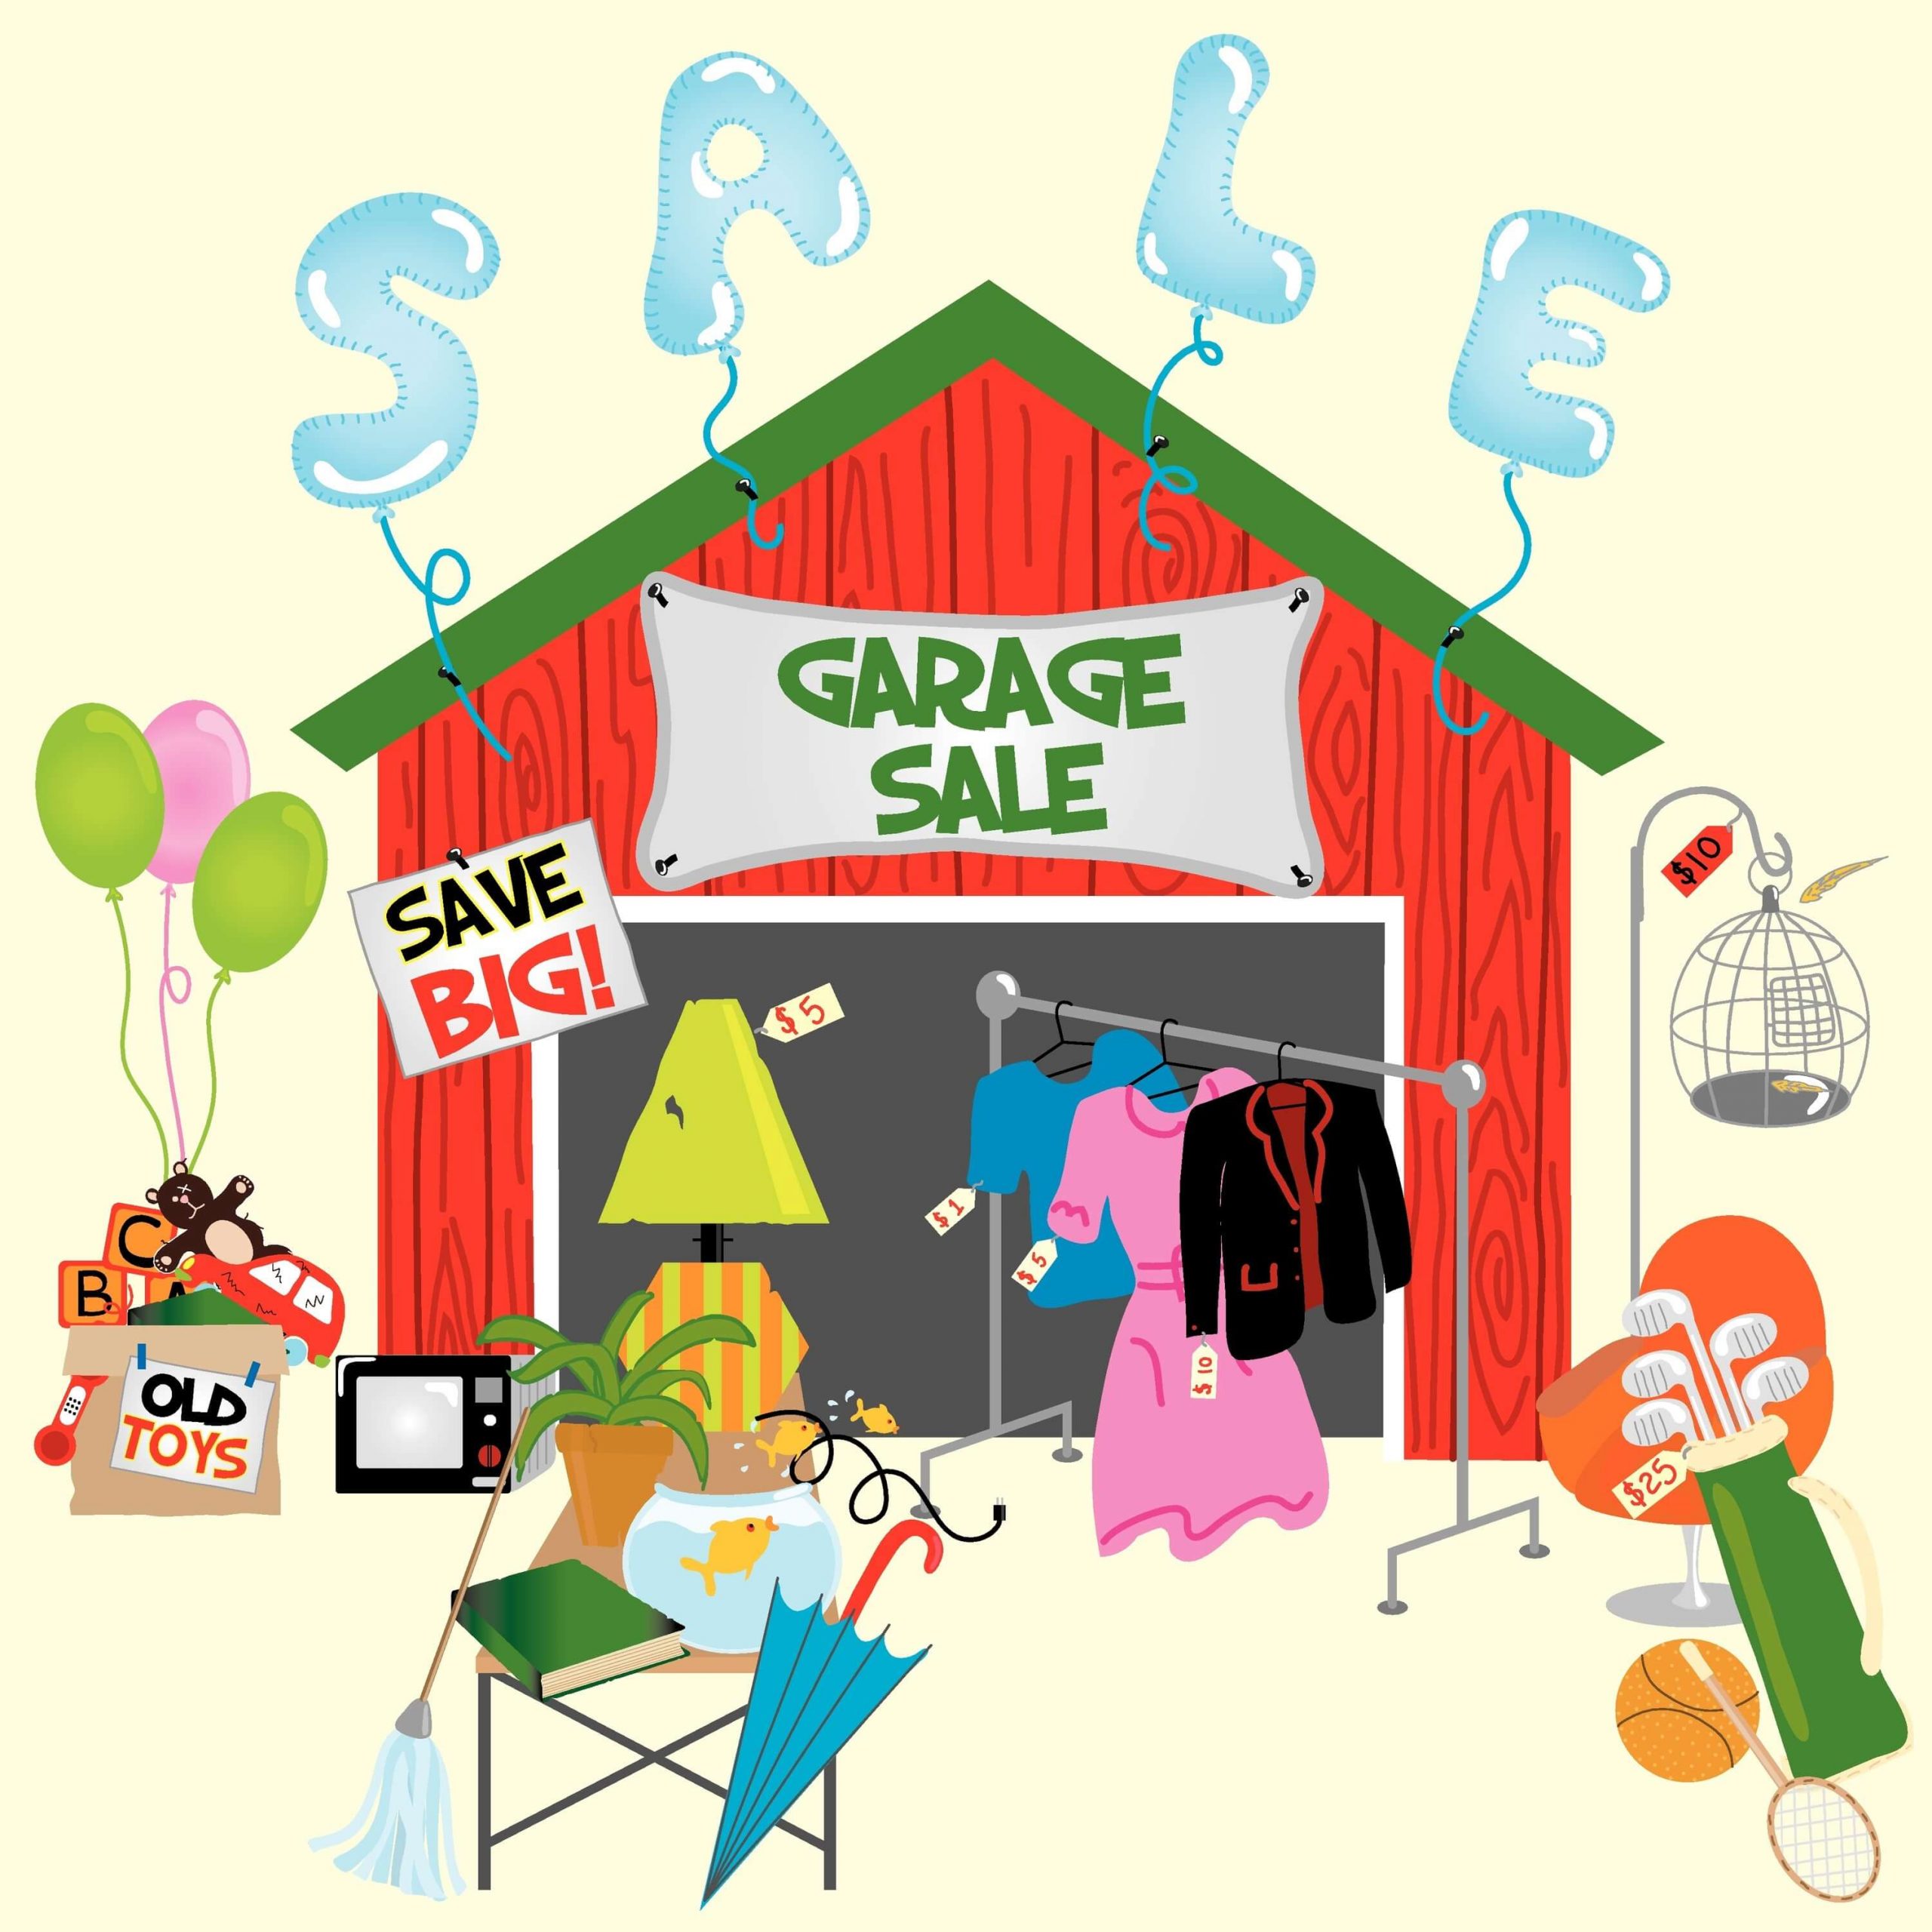 Garage Sale Image